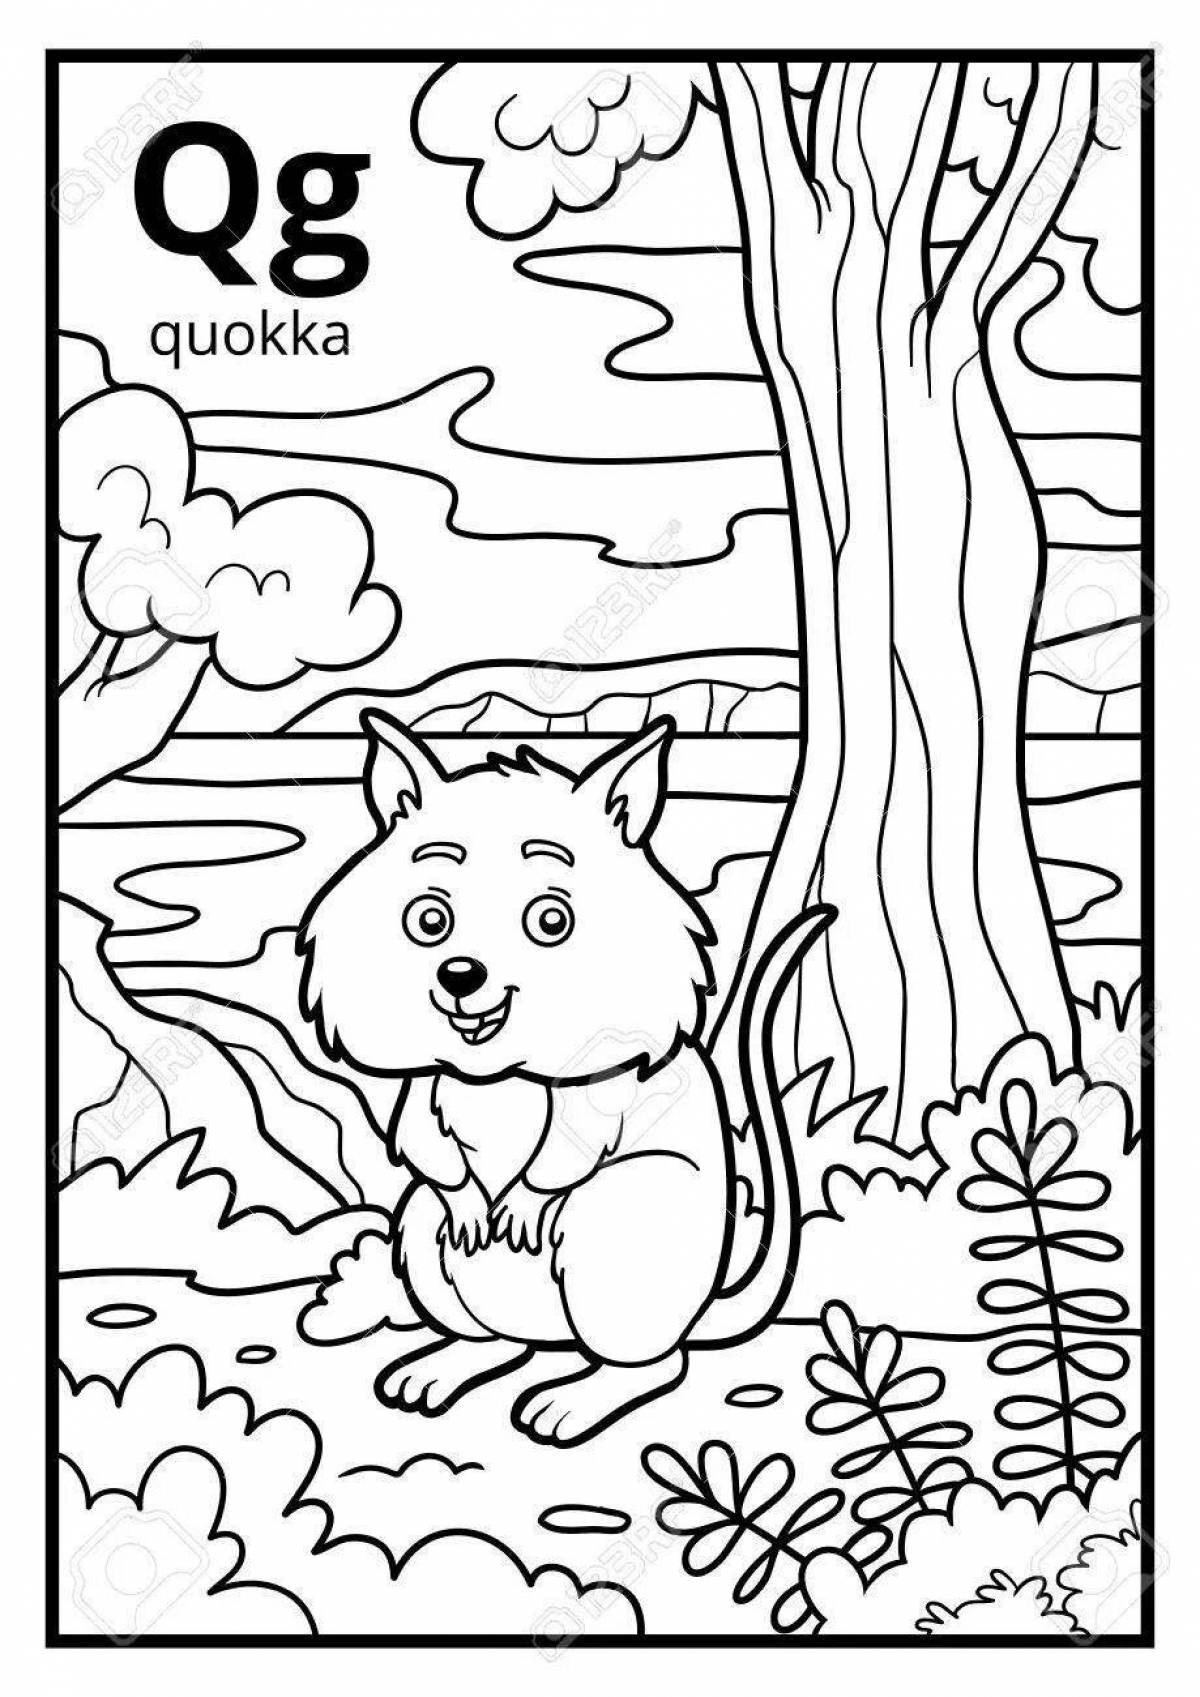 Adorable quokka coloring book